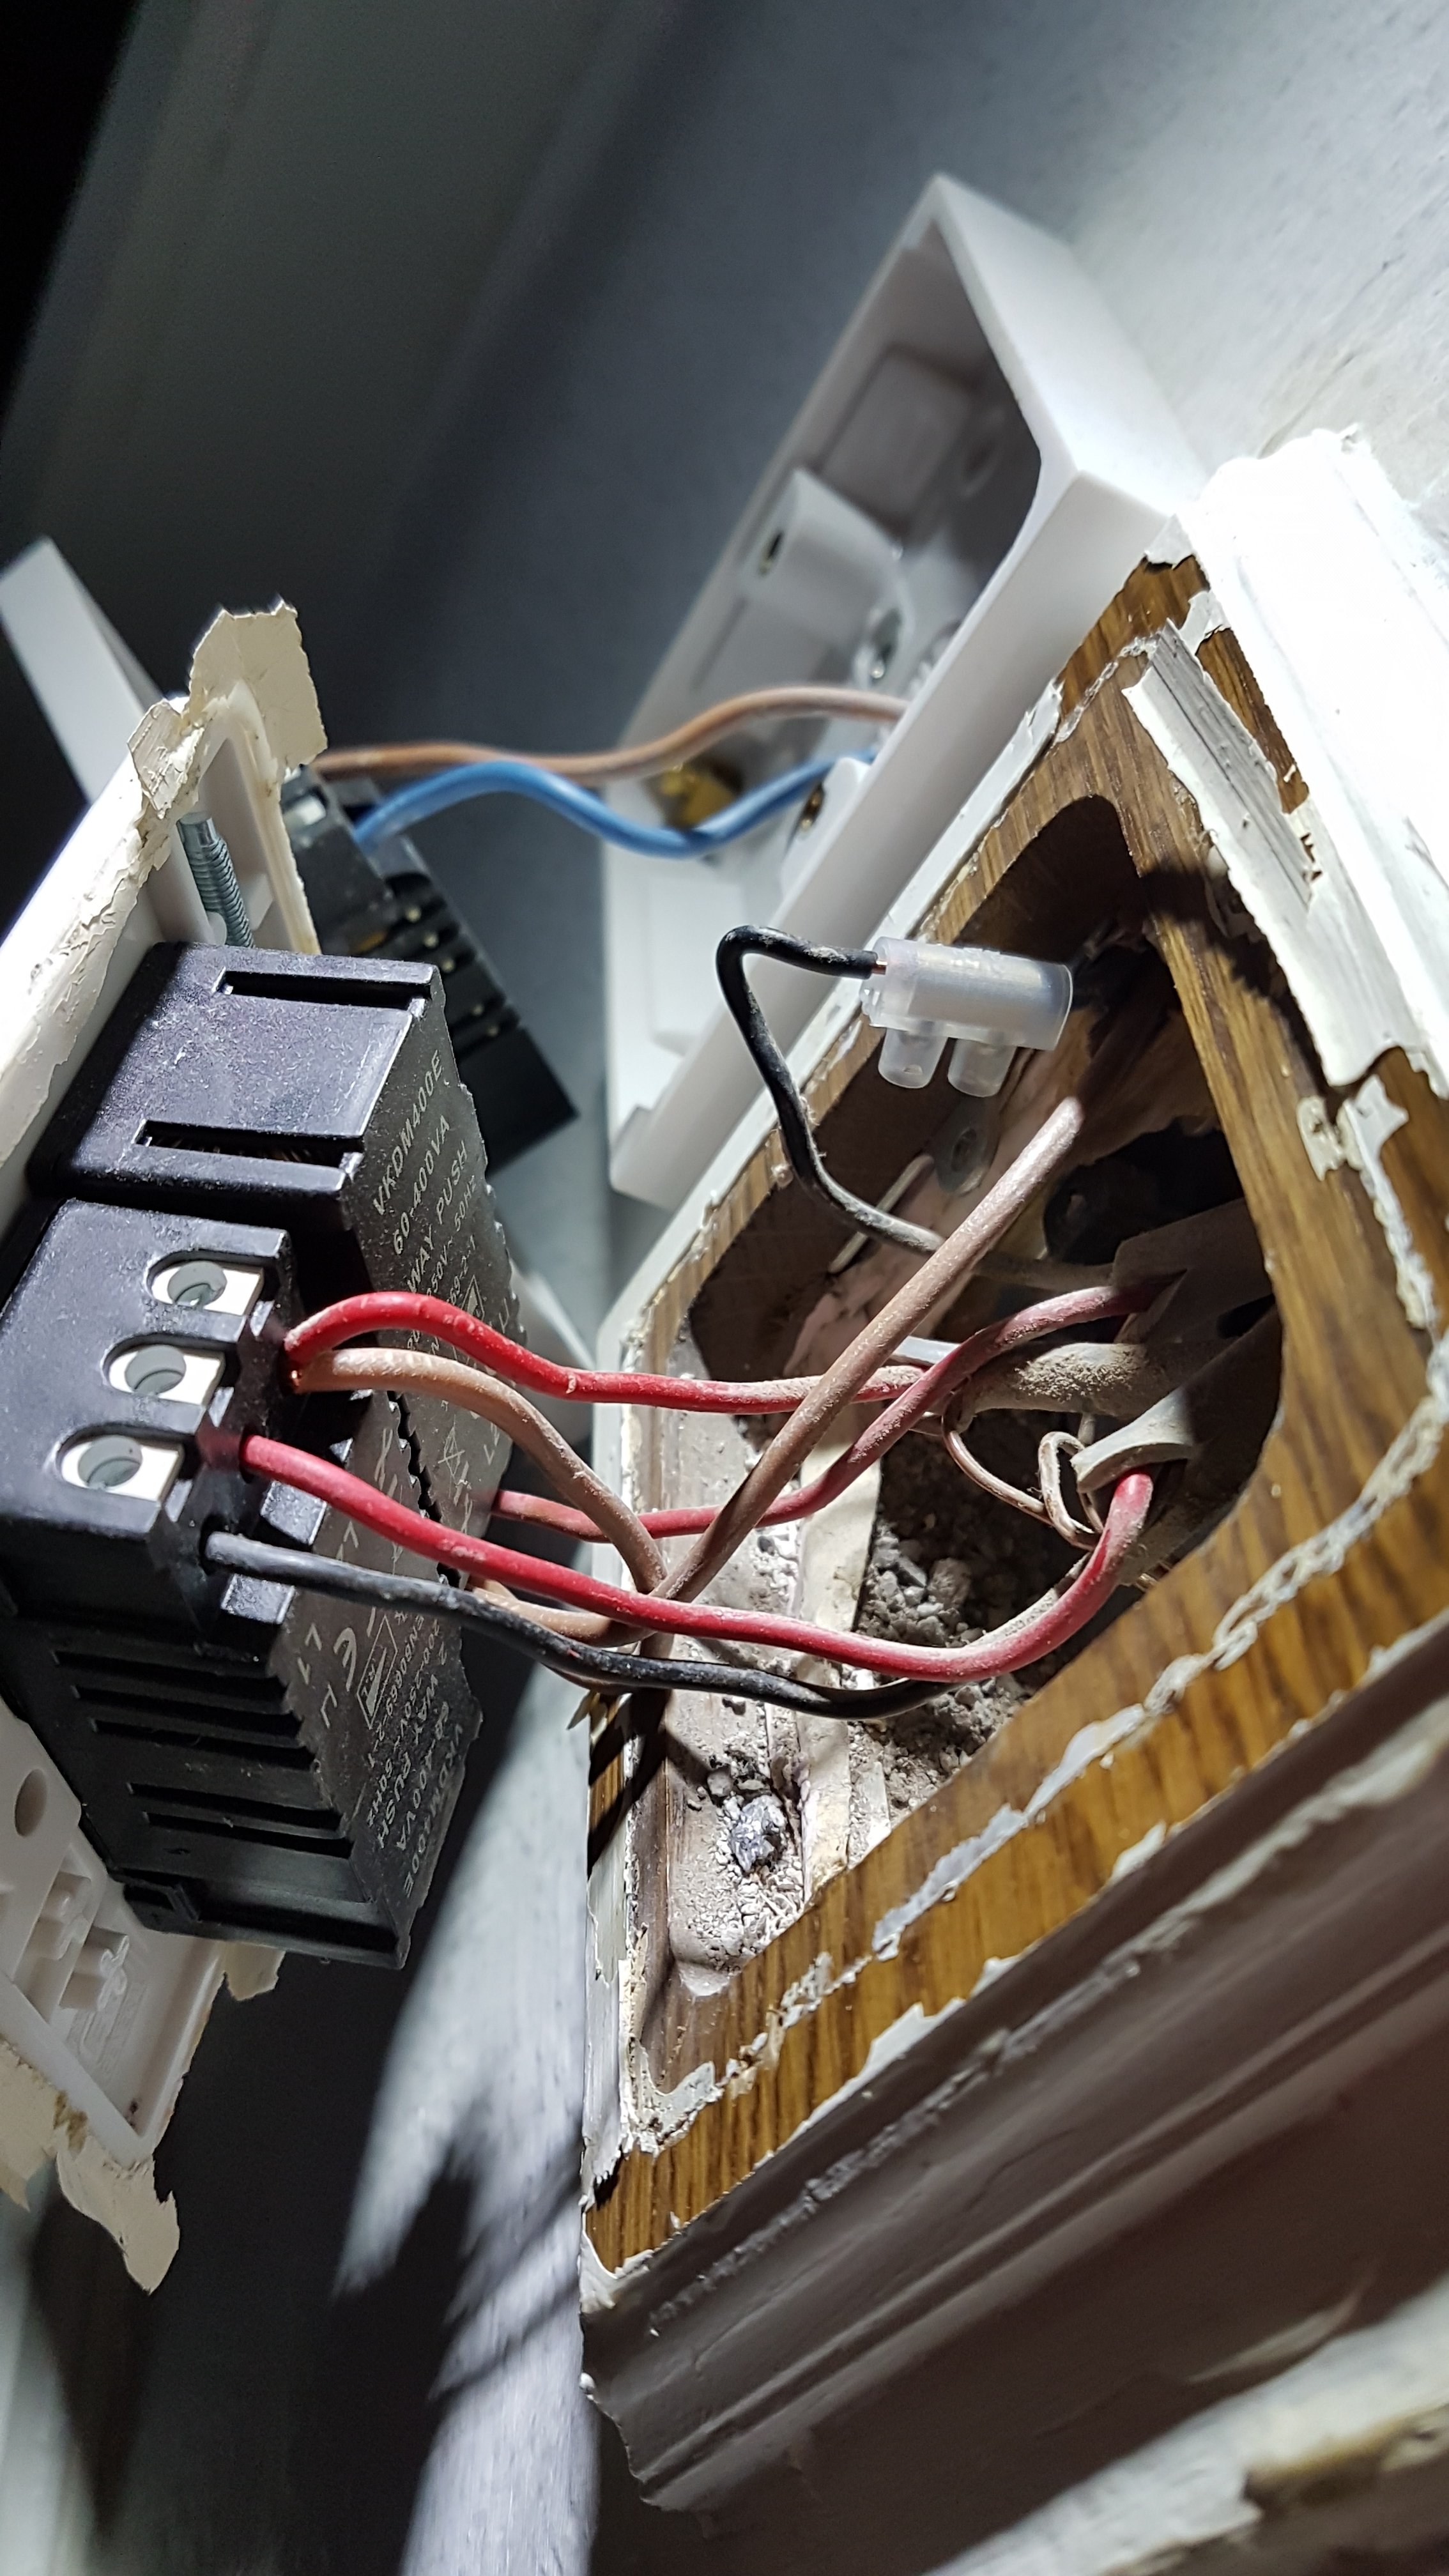 Smart switch wiring issues 20180210_101820 - EletriciansForums.net